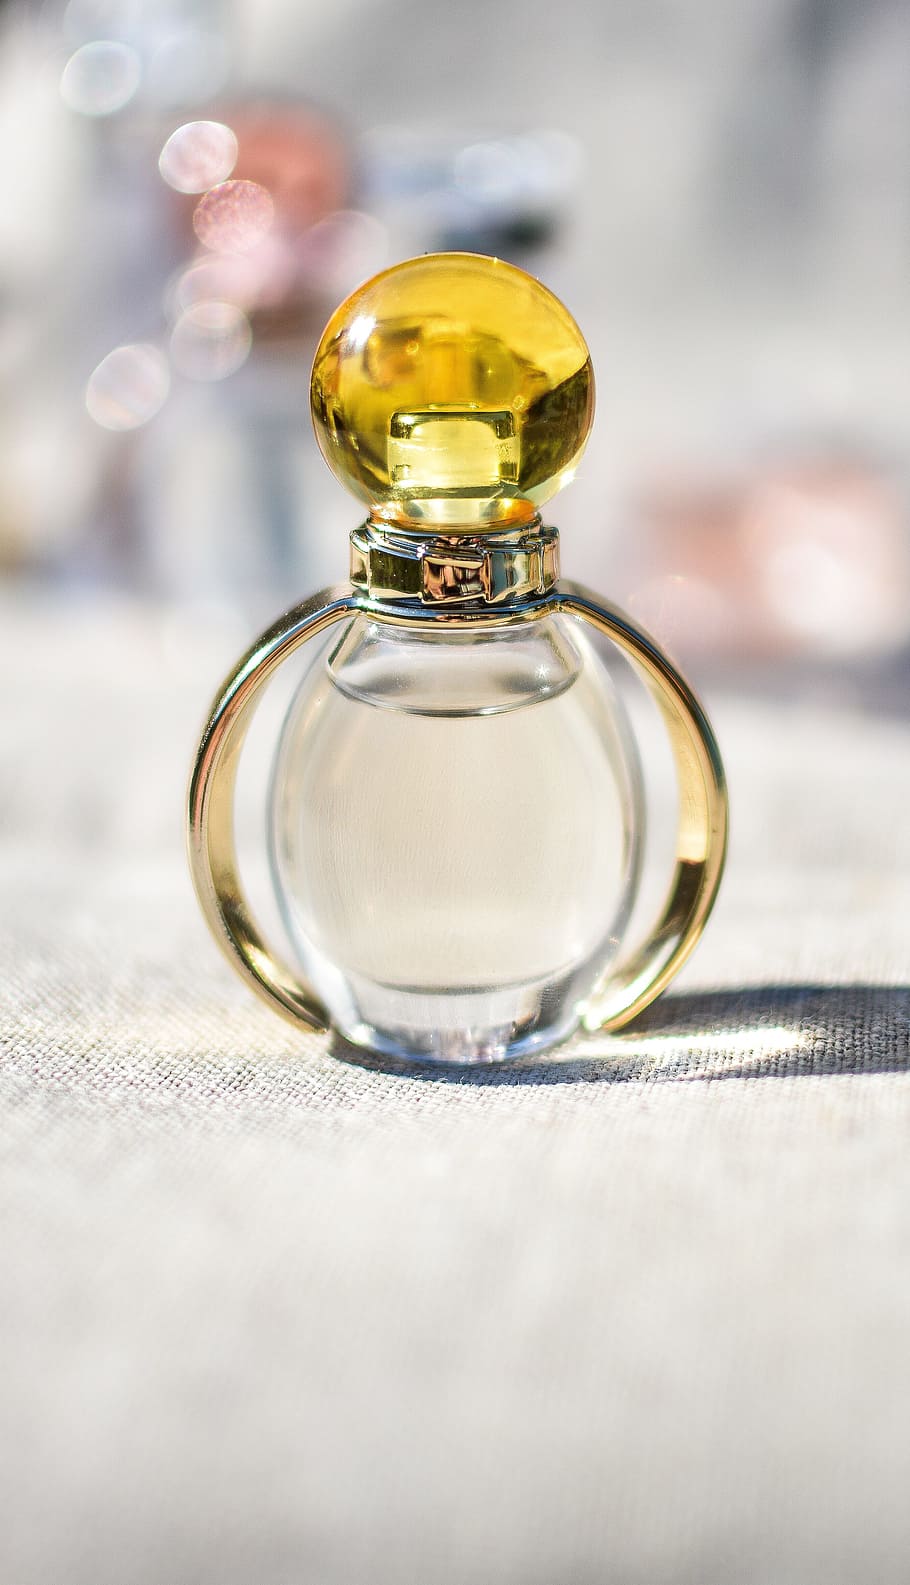 yellow, glass perfume bottle, glass, perfume bottle, bottle, perfume, scent, aroma, smell, fragrance